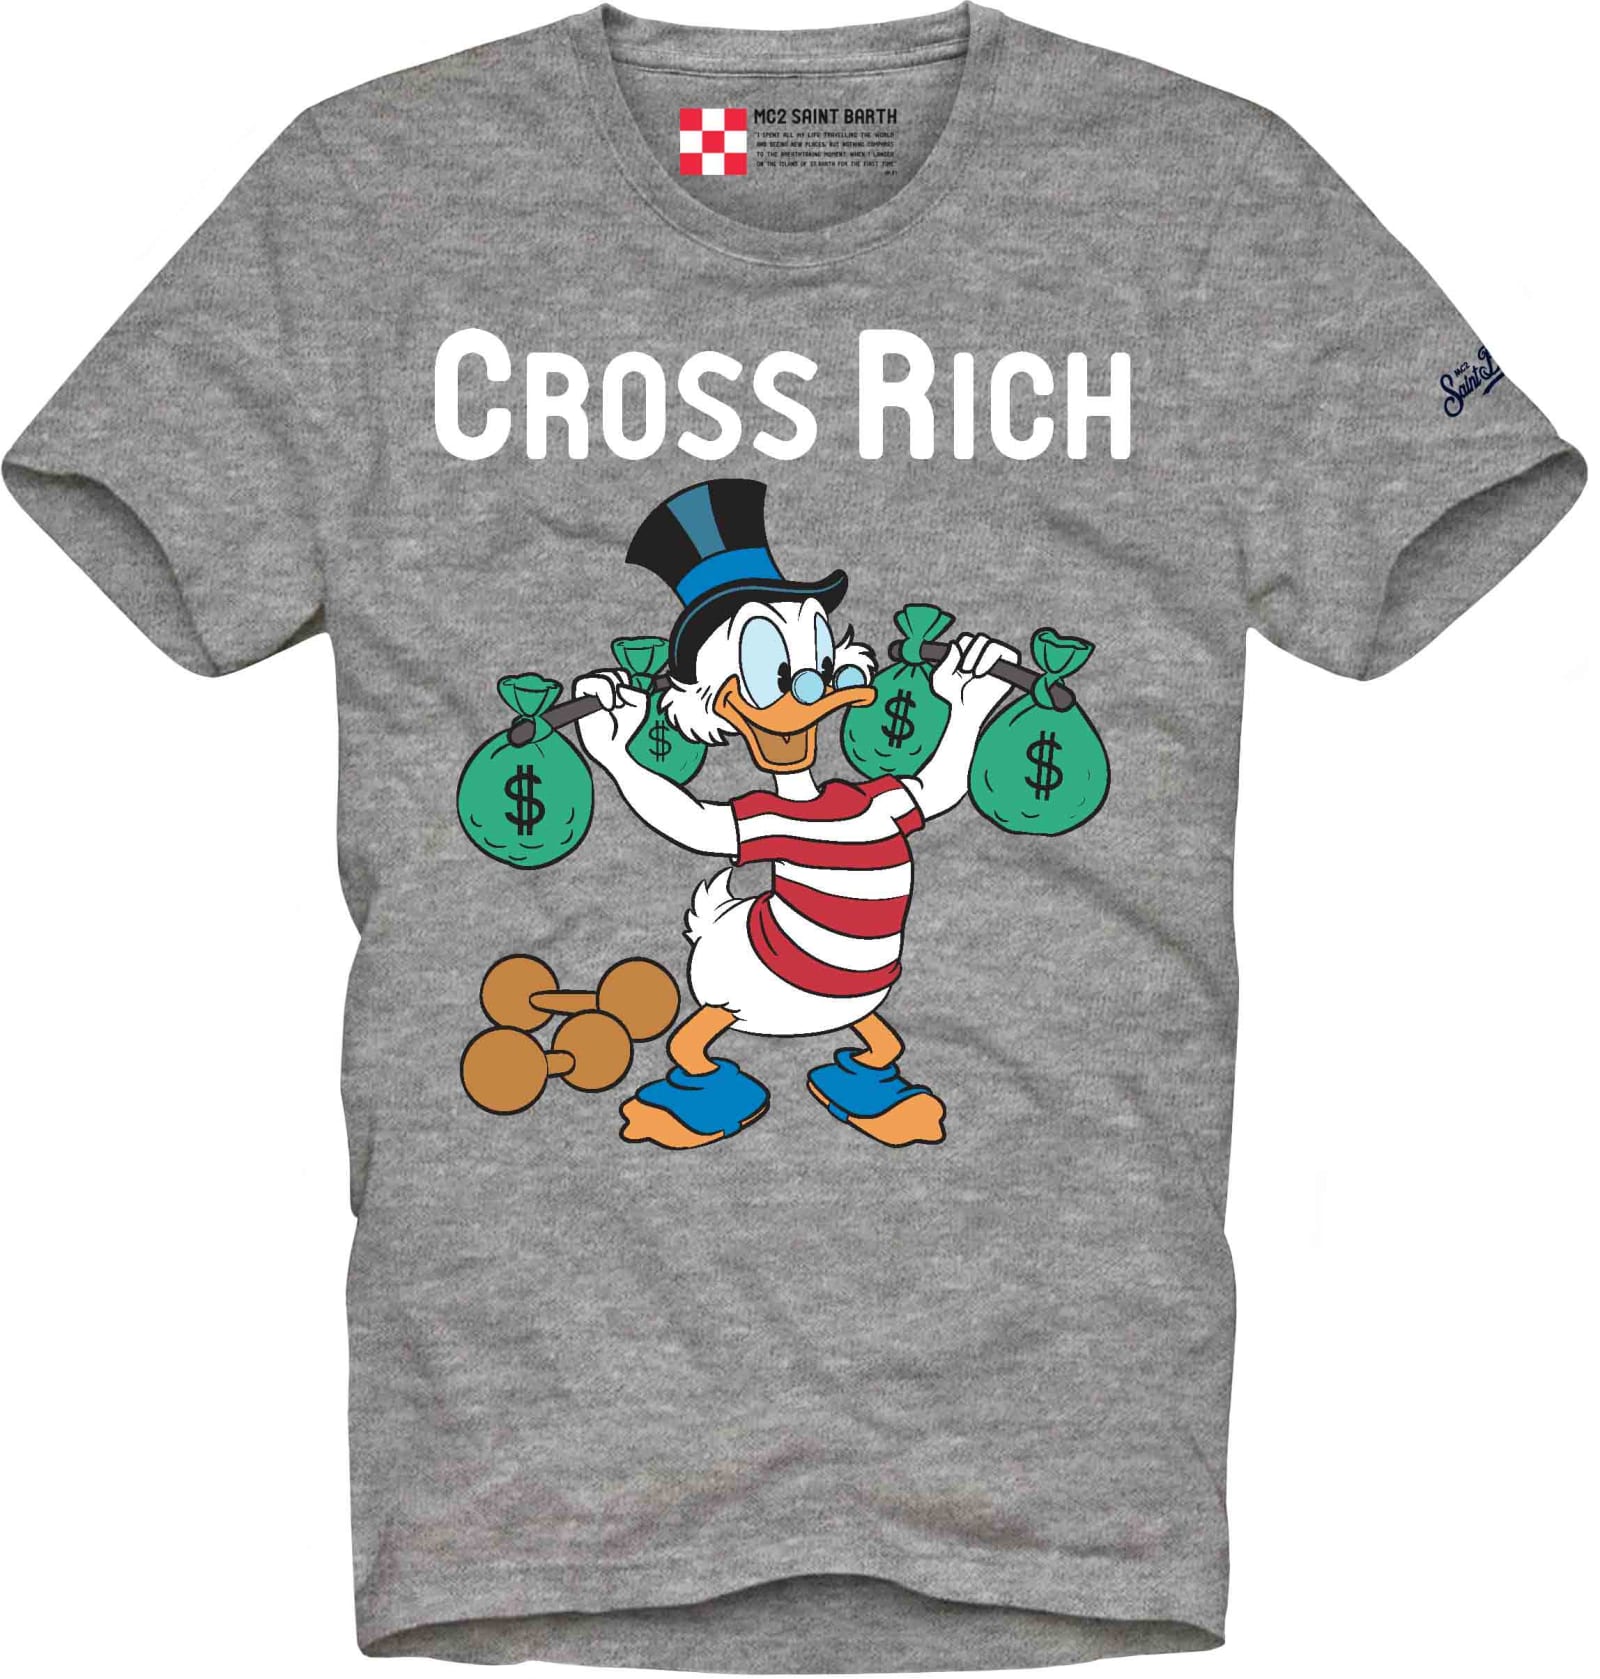 MC2 Saint Barth Cross Rich Printed Grey T-shirt - Disney Special Edition ©